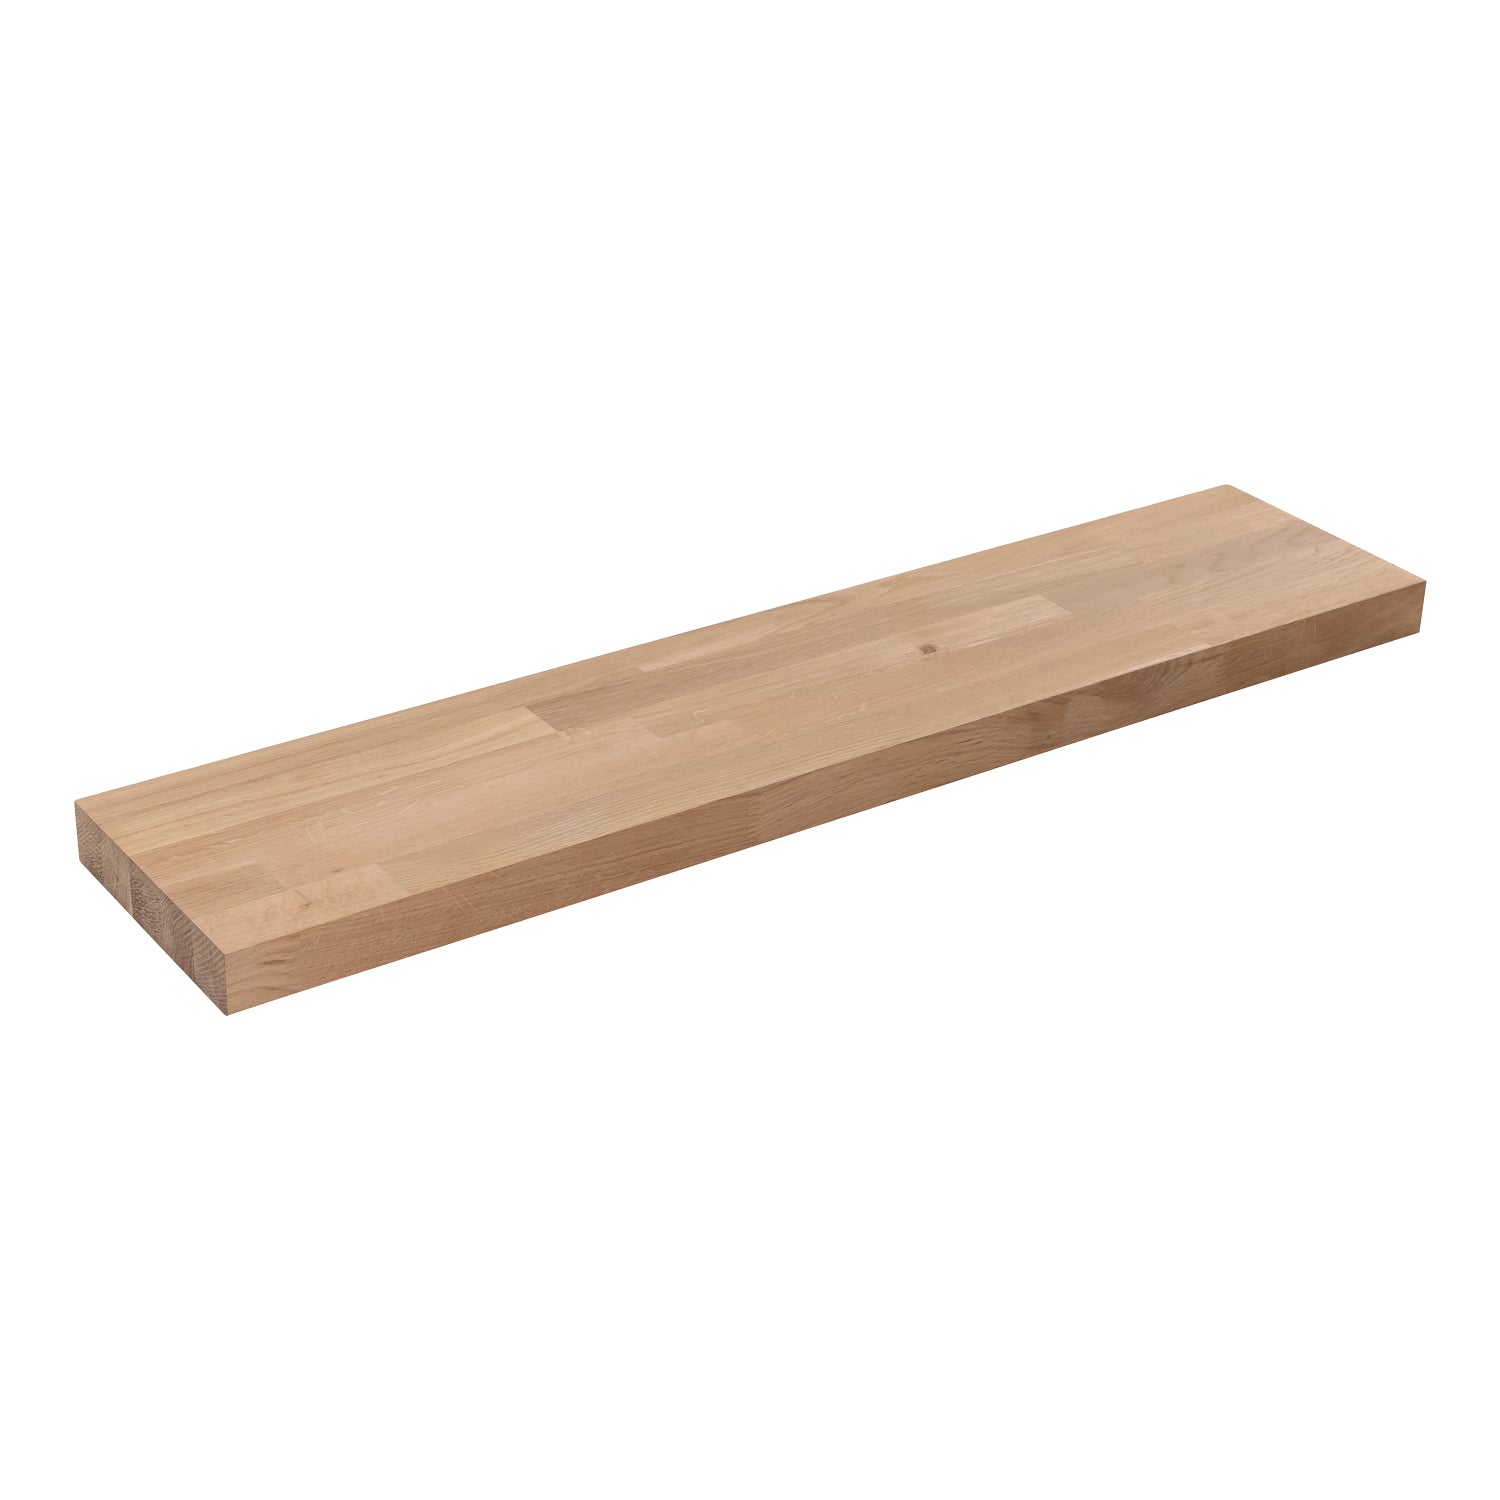 Solid Oak Wall Shelf - 40mm thick